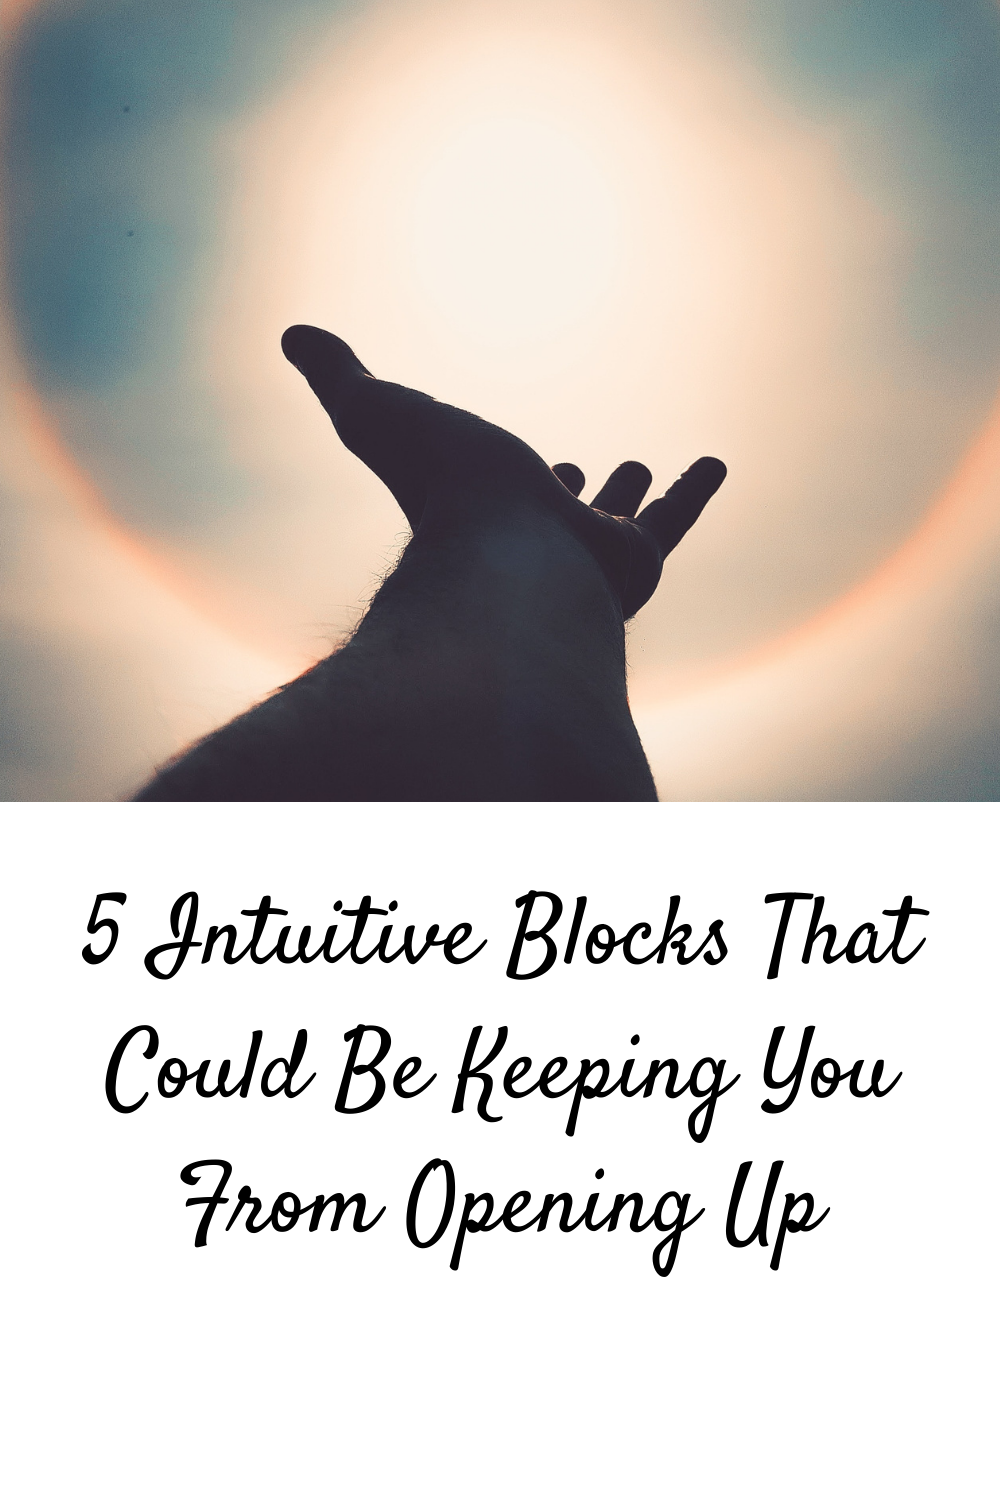 5 intuitive blocks